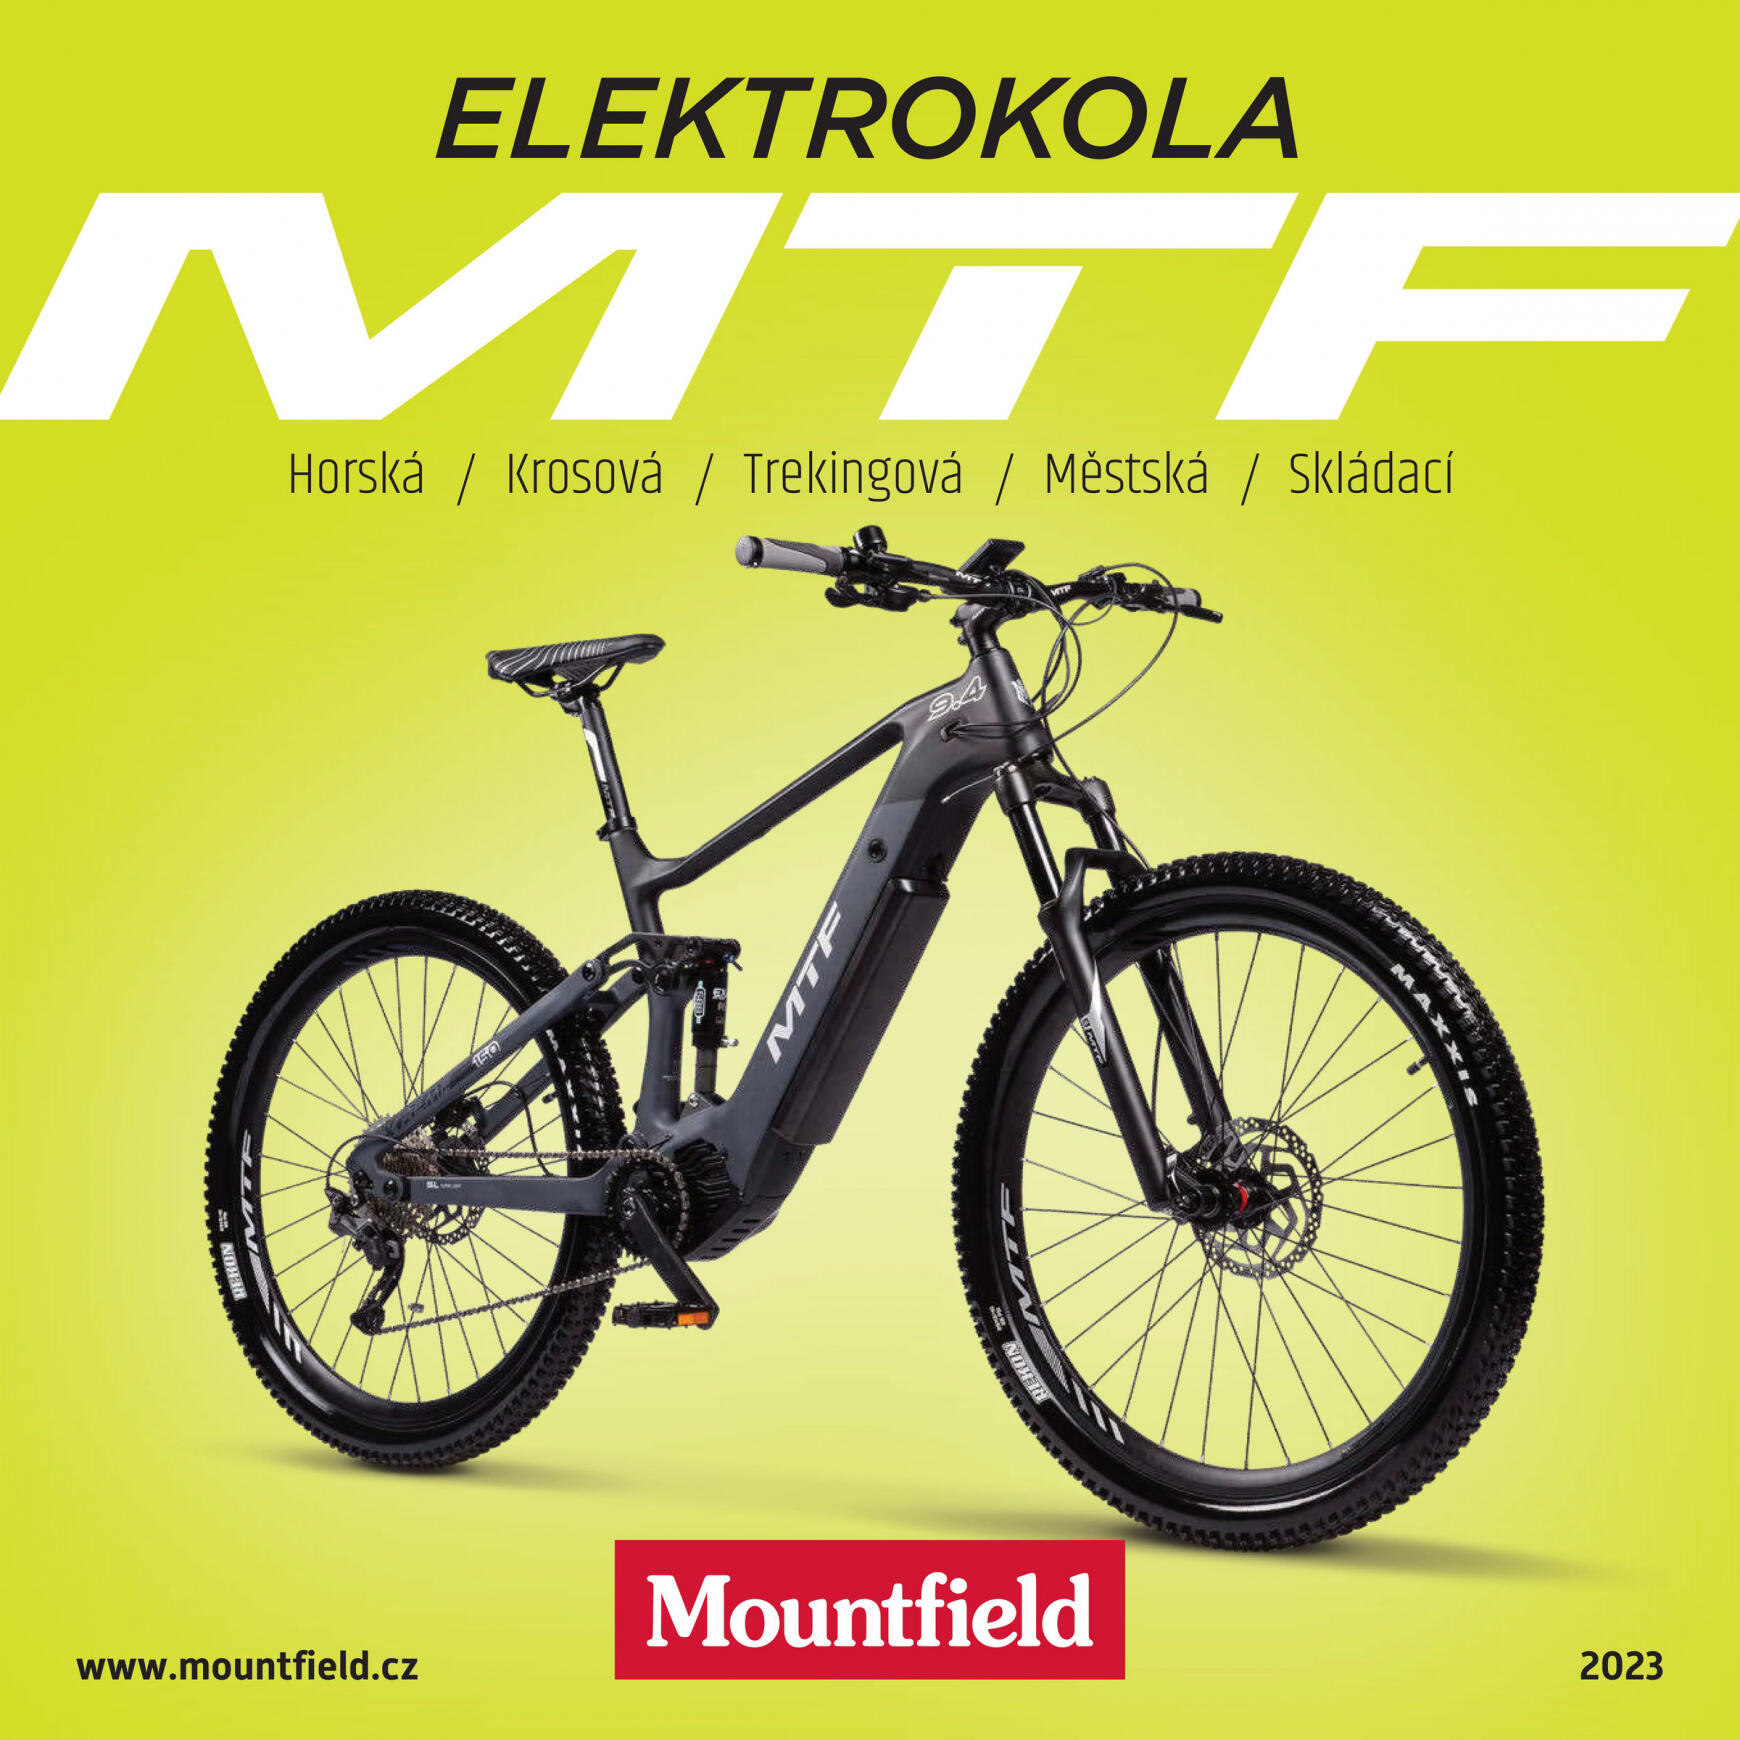 mountfield - Mountfield - Katalog elektrokol platný od 12.04.2023 - page: 1